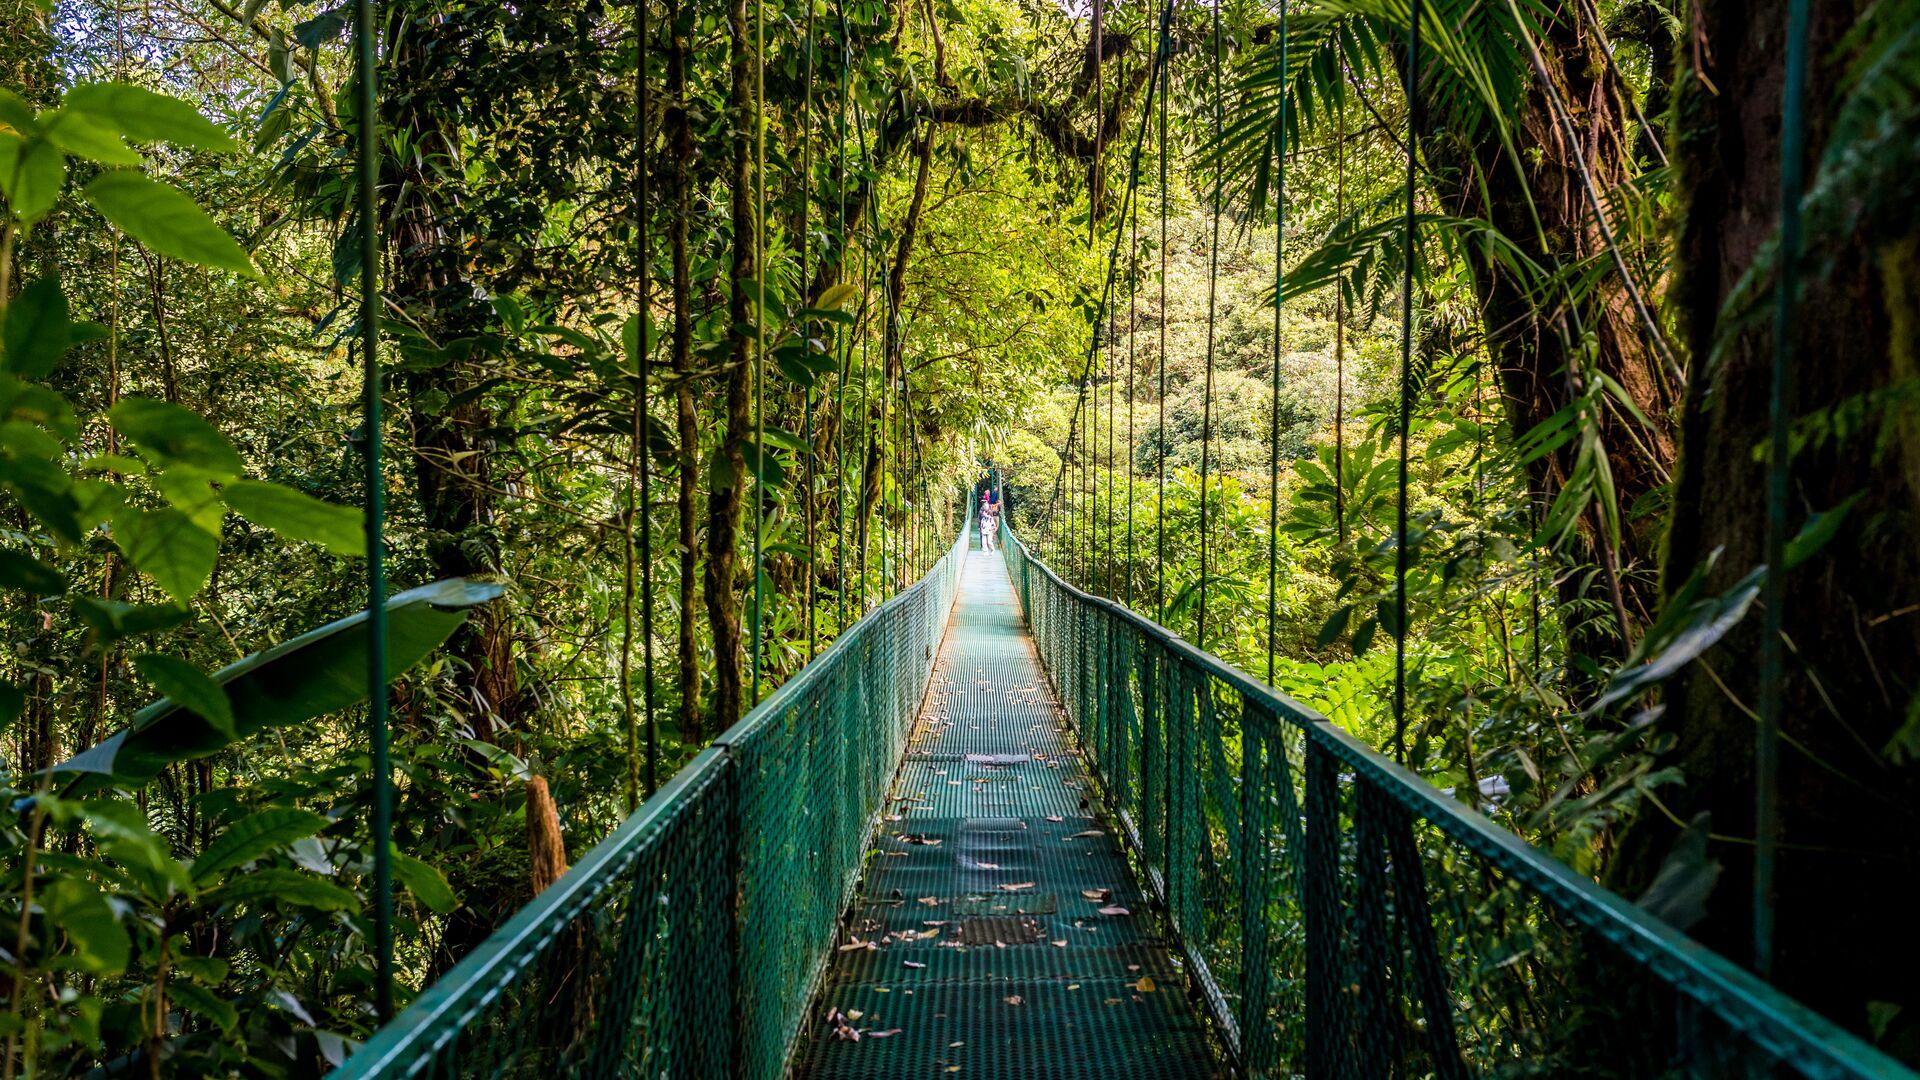 Walking on hanging bridges in Cloudforest - Travel destination Costa Rica